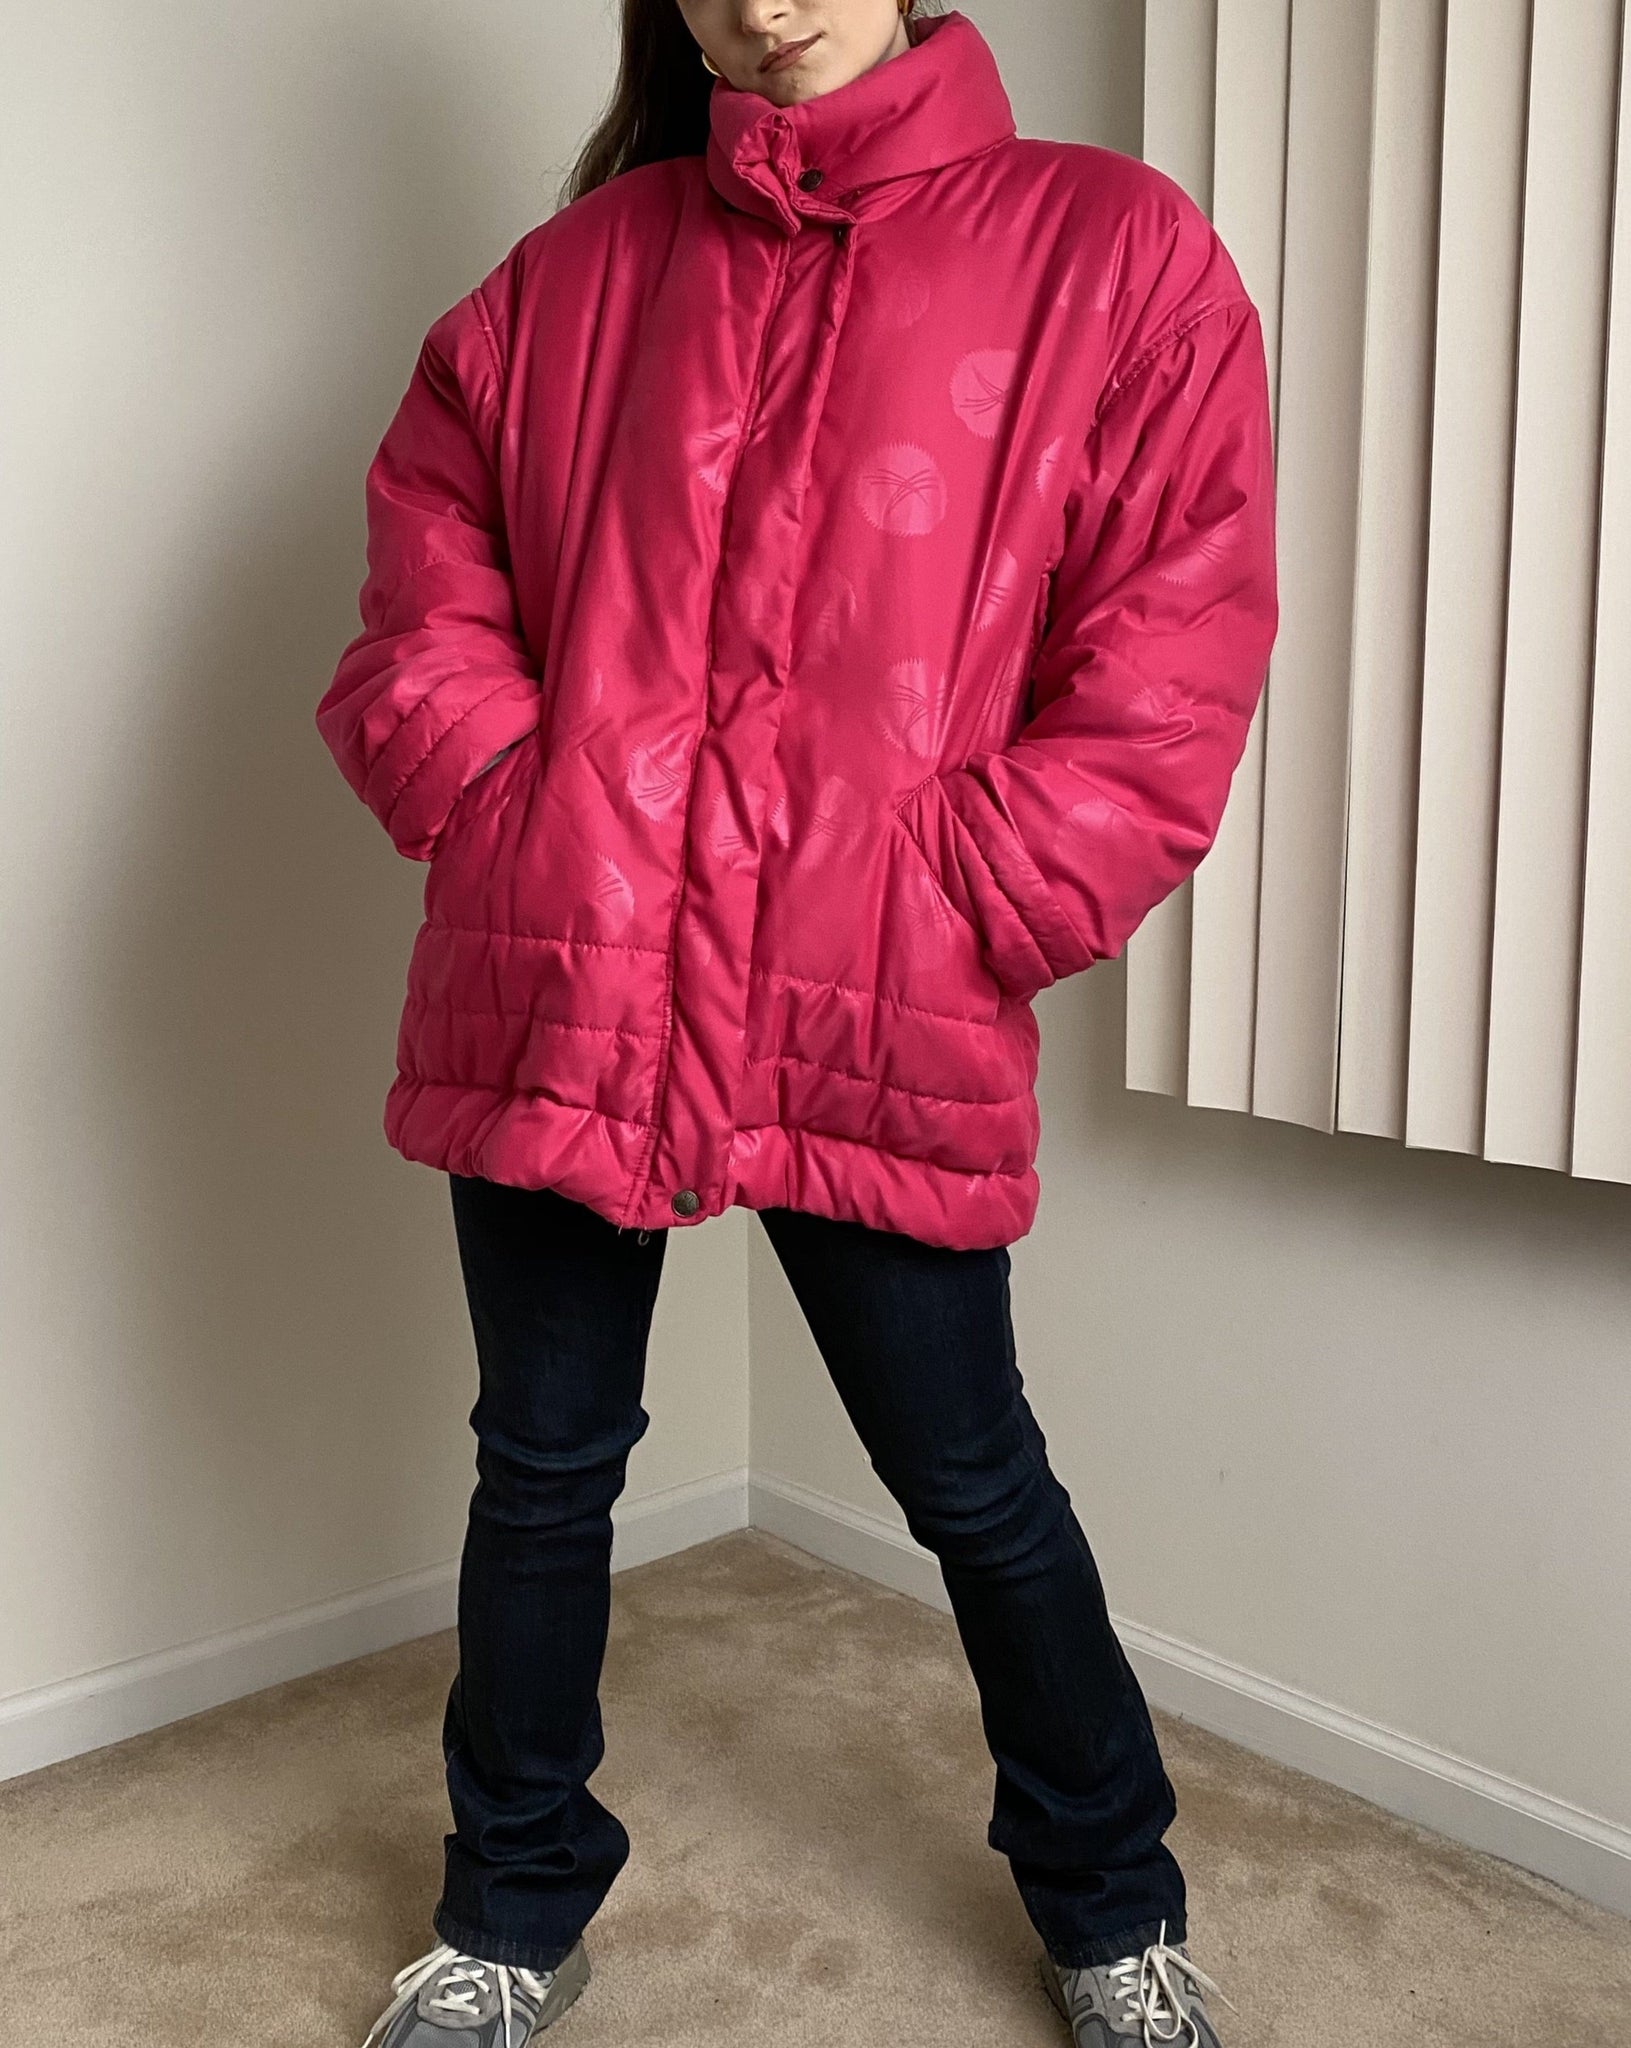 Hot Pink Puffer Jacket (size M)